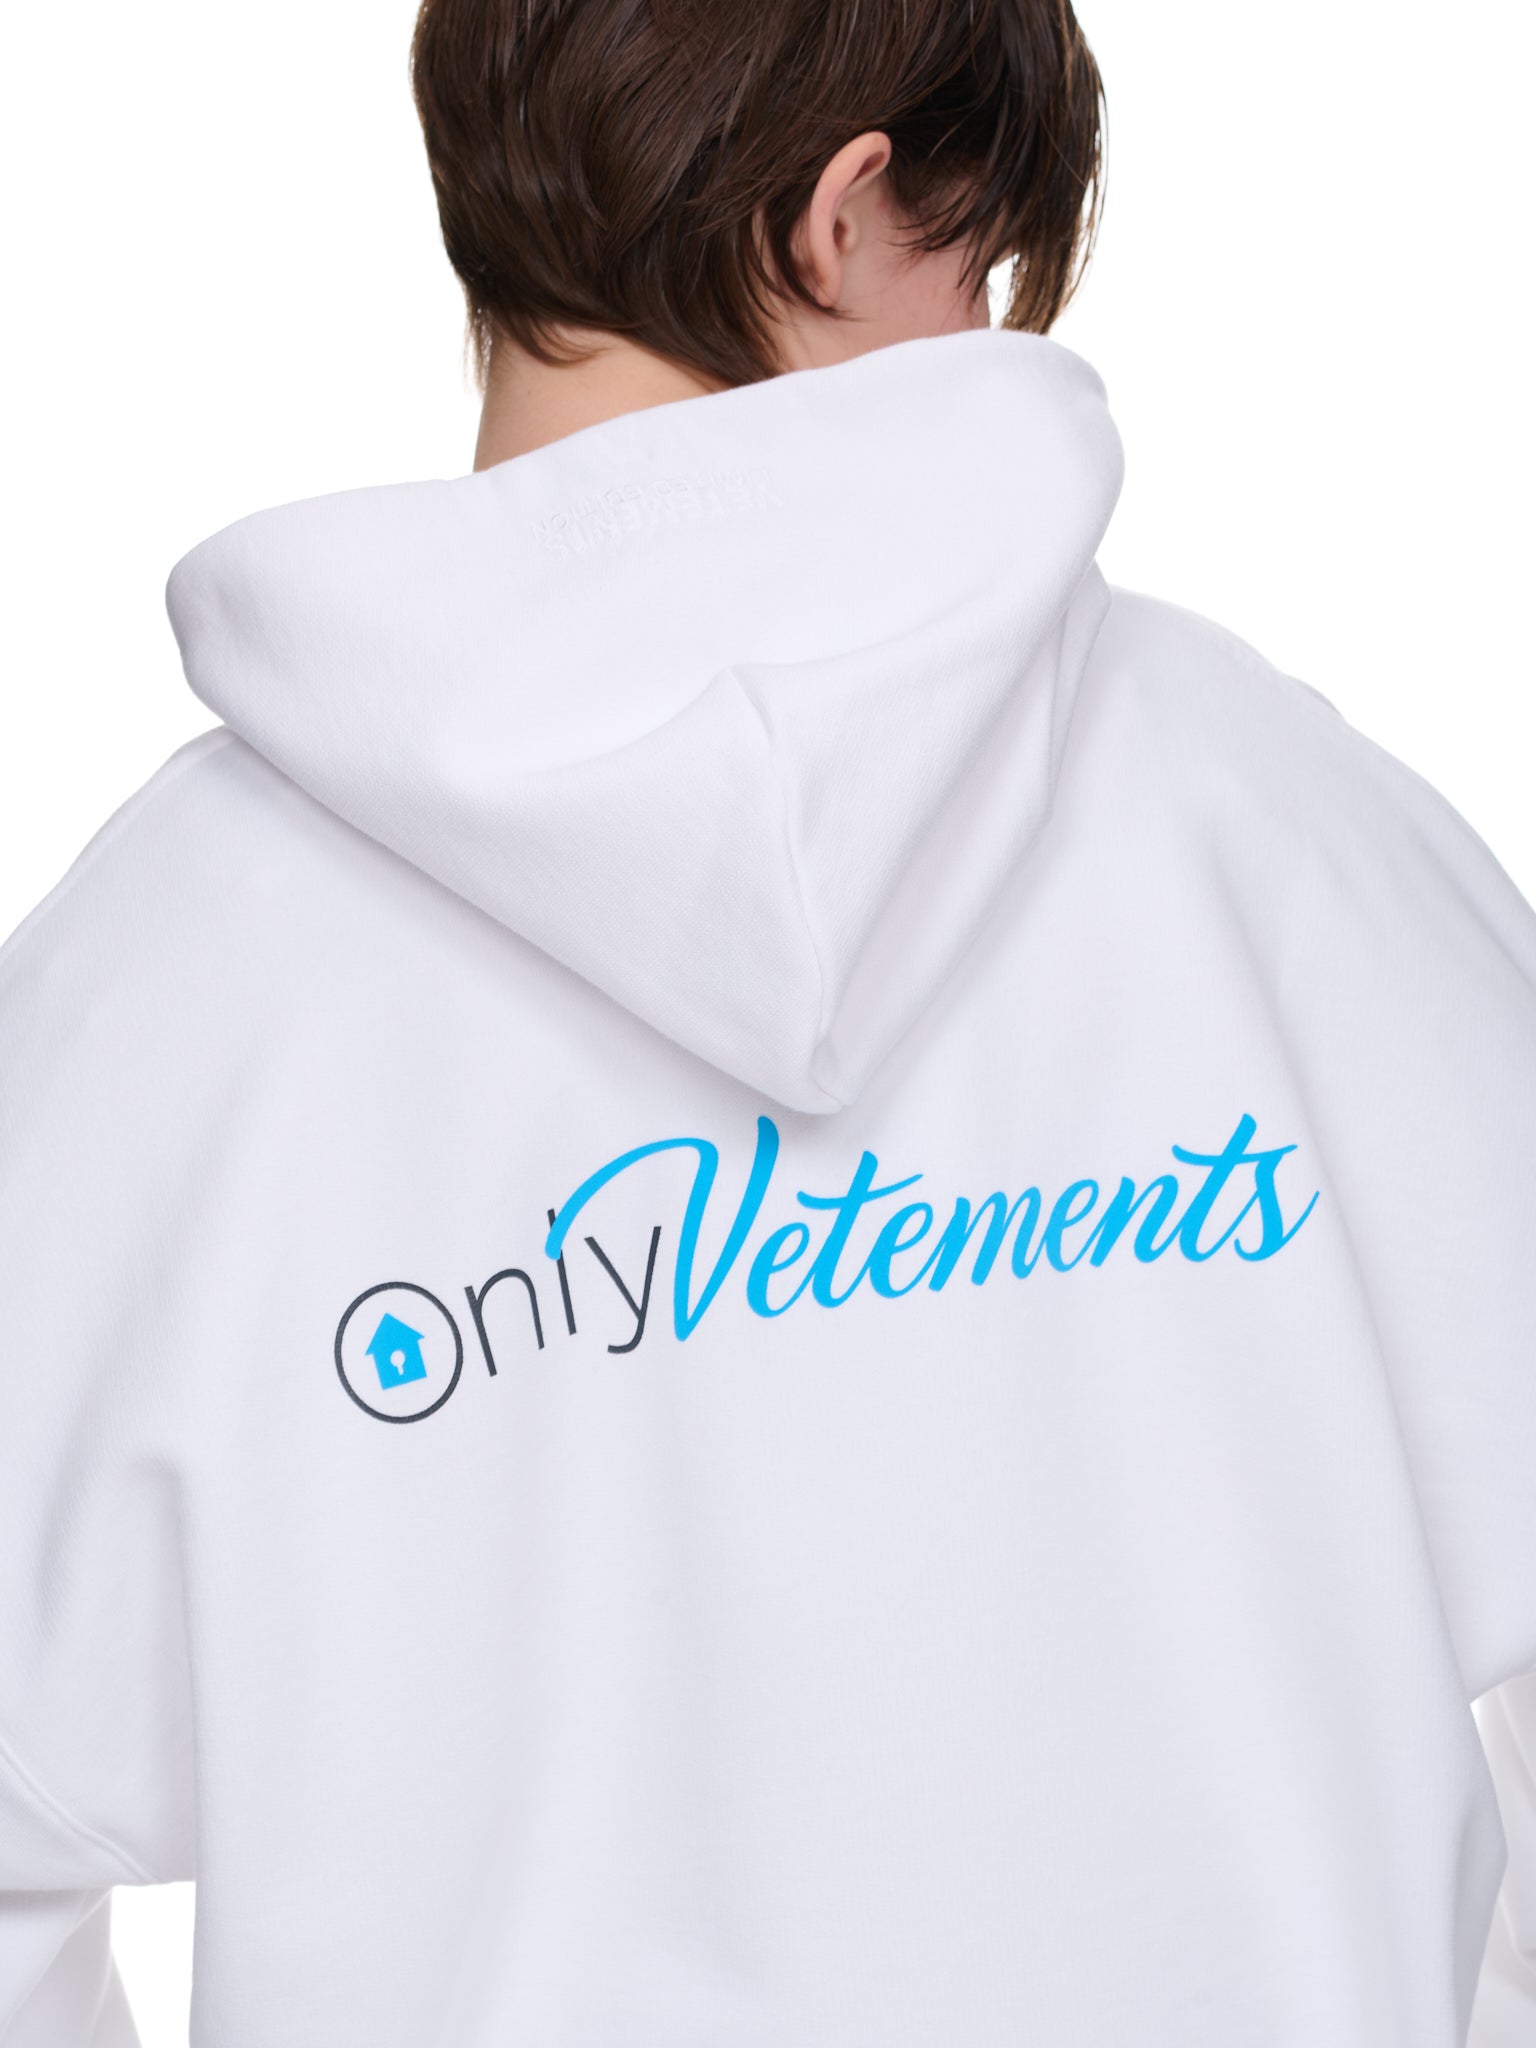 Only Vetements Hoodie (UA63HD161W-WHITE)